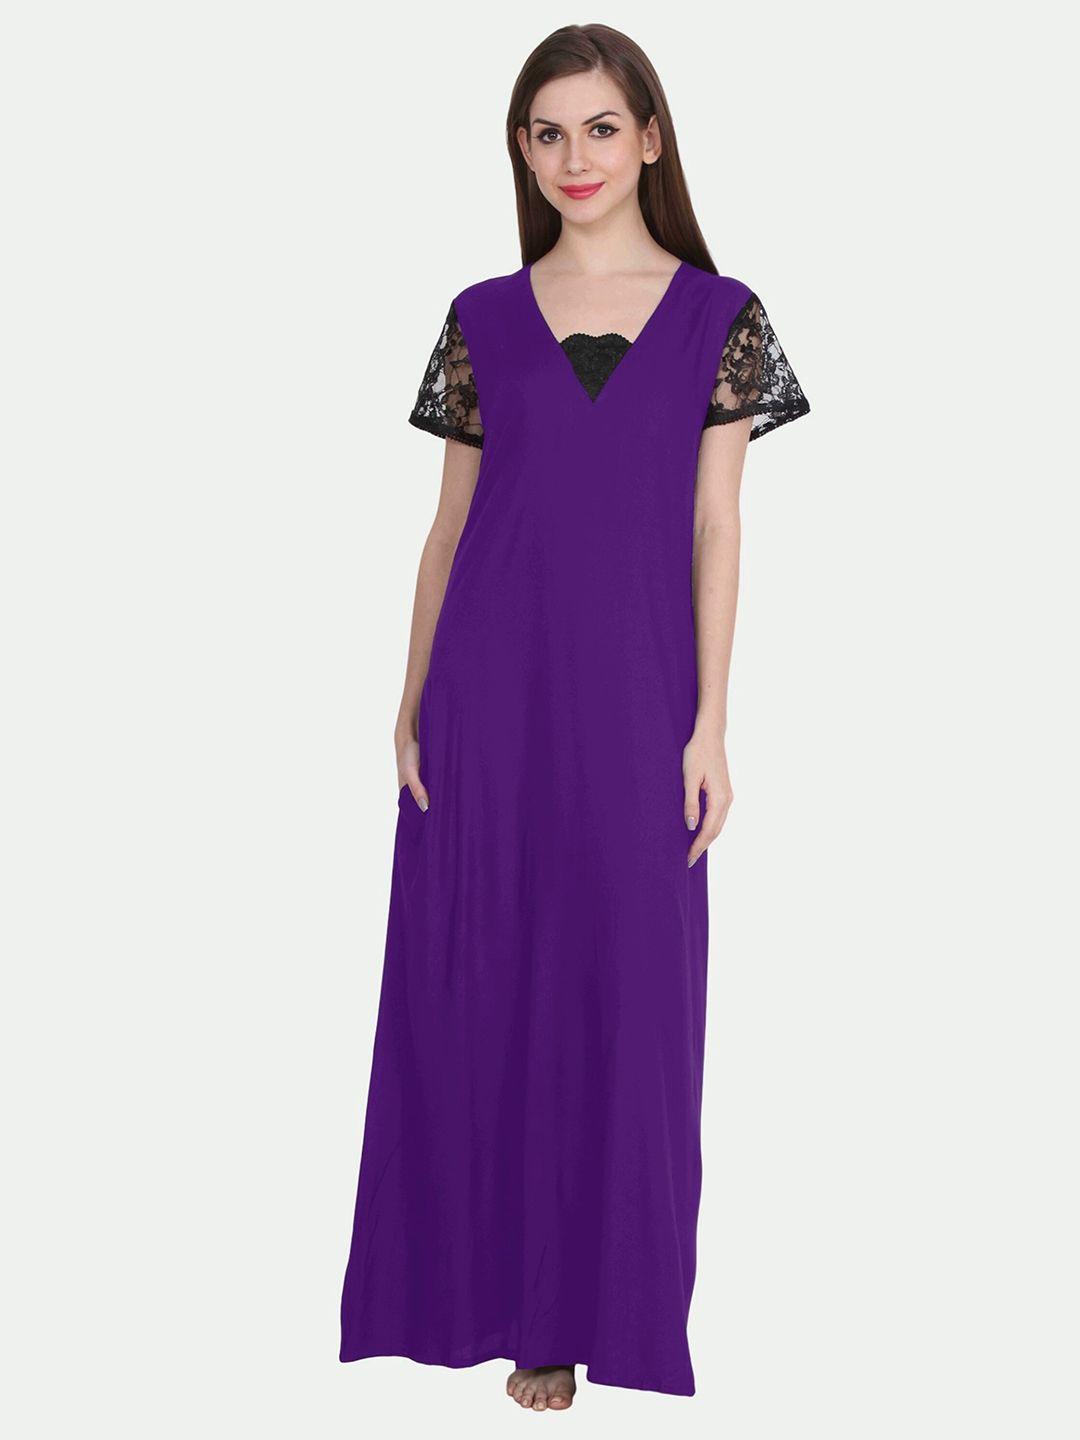 patrorna-women-purple-maxi-nightdress